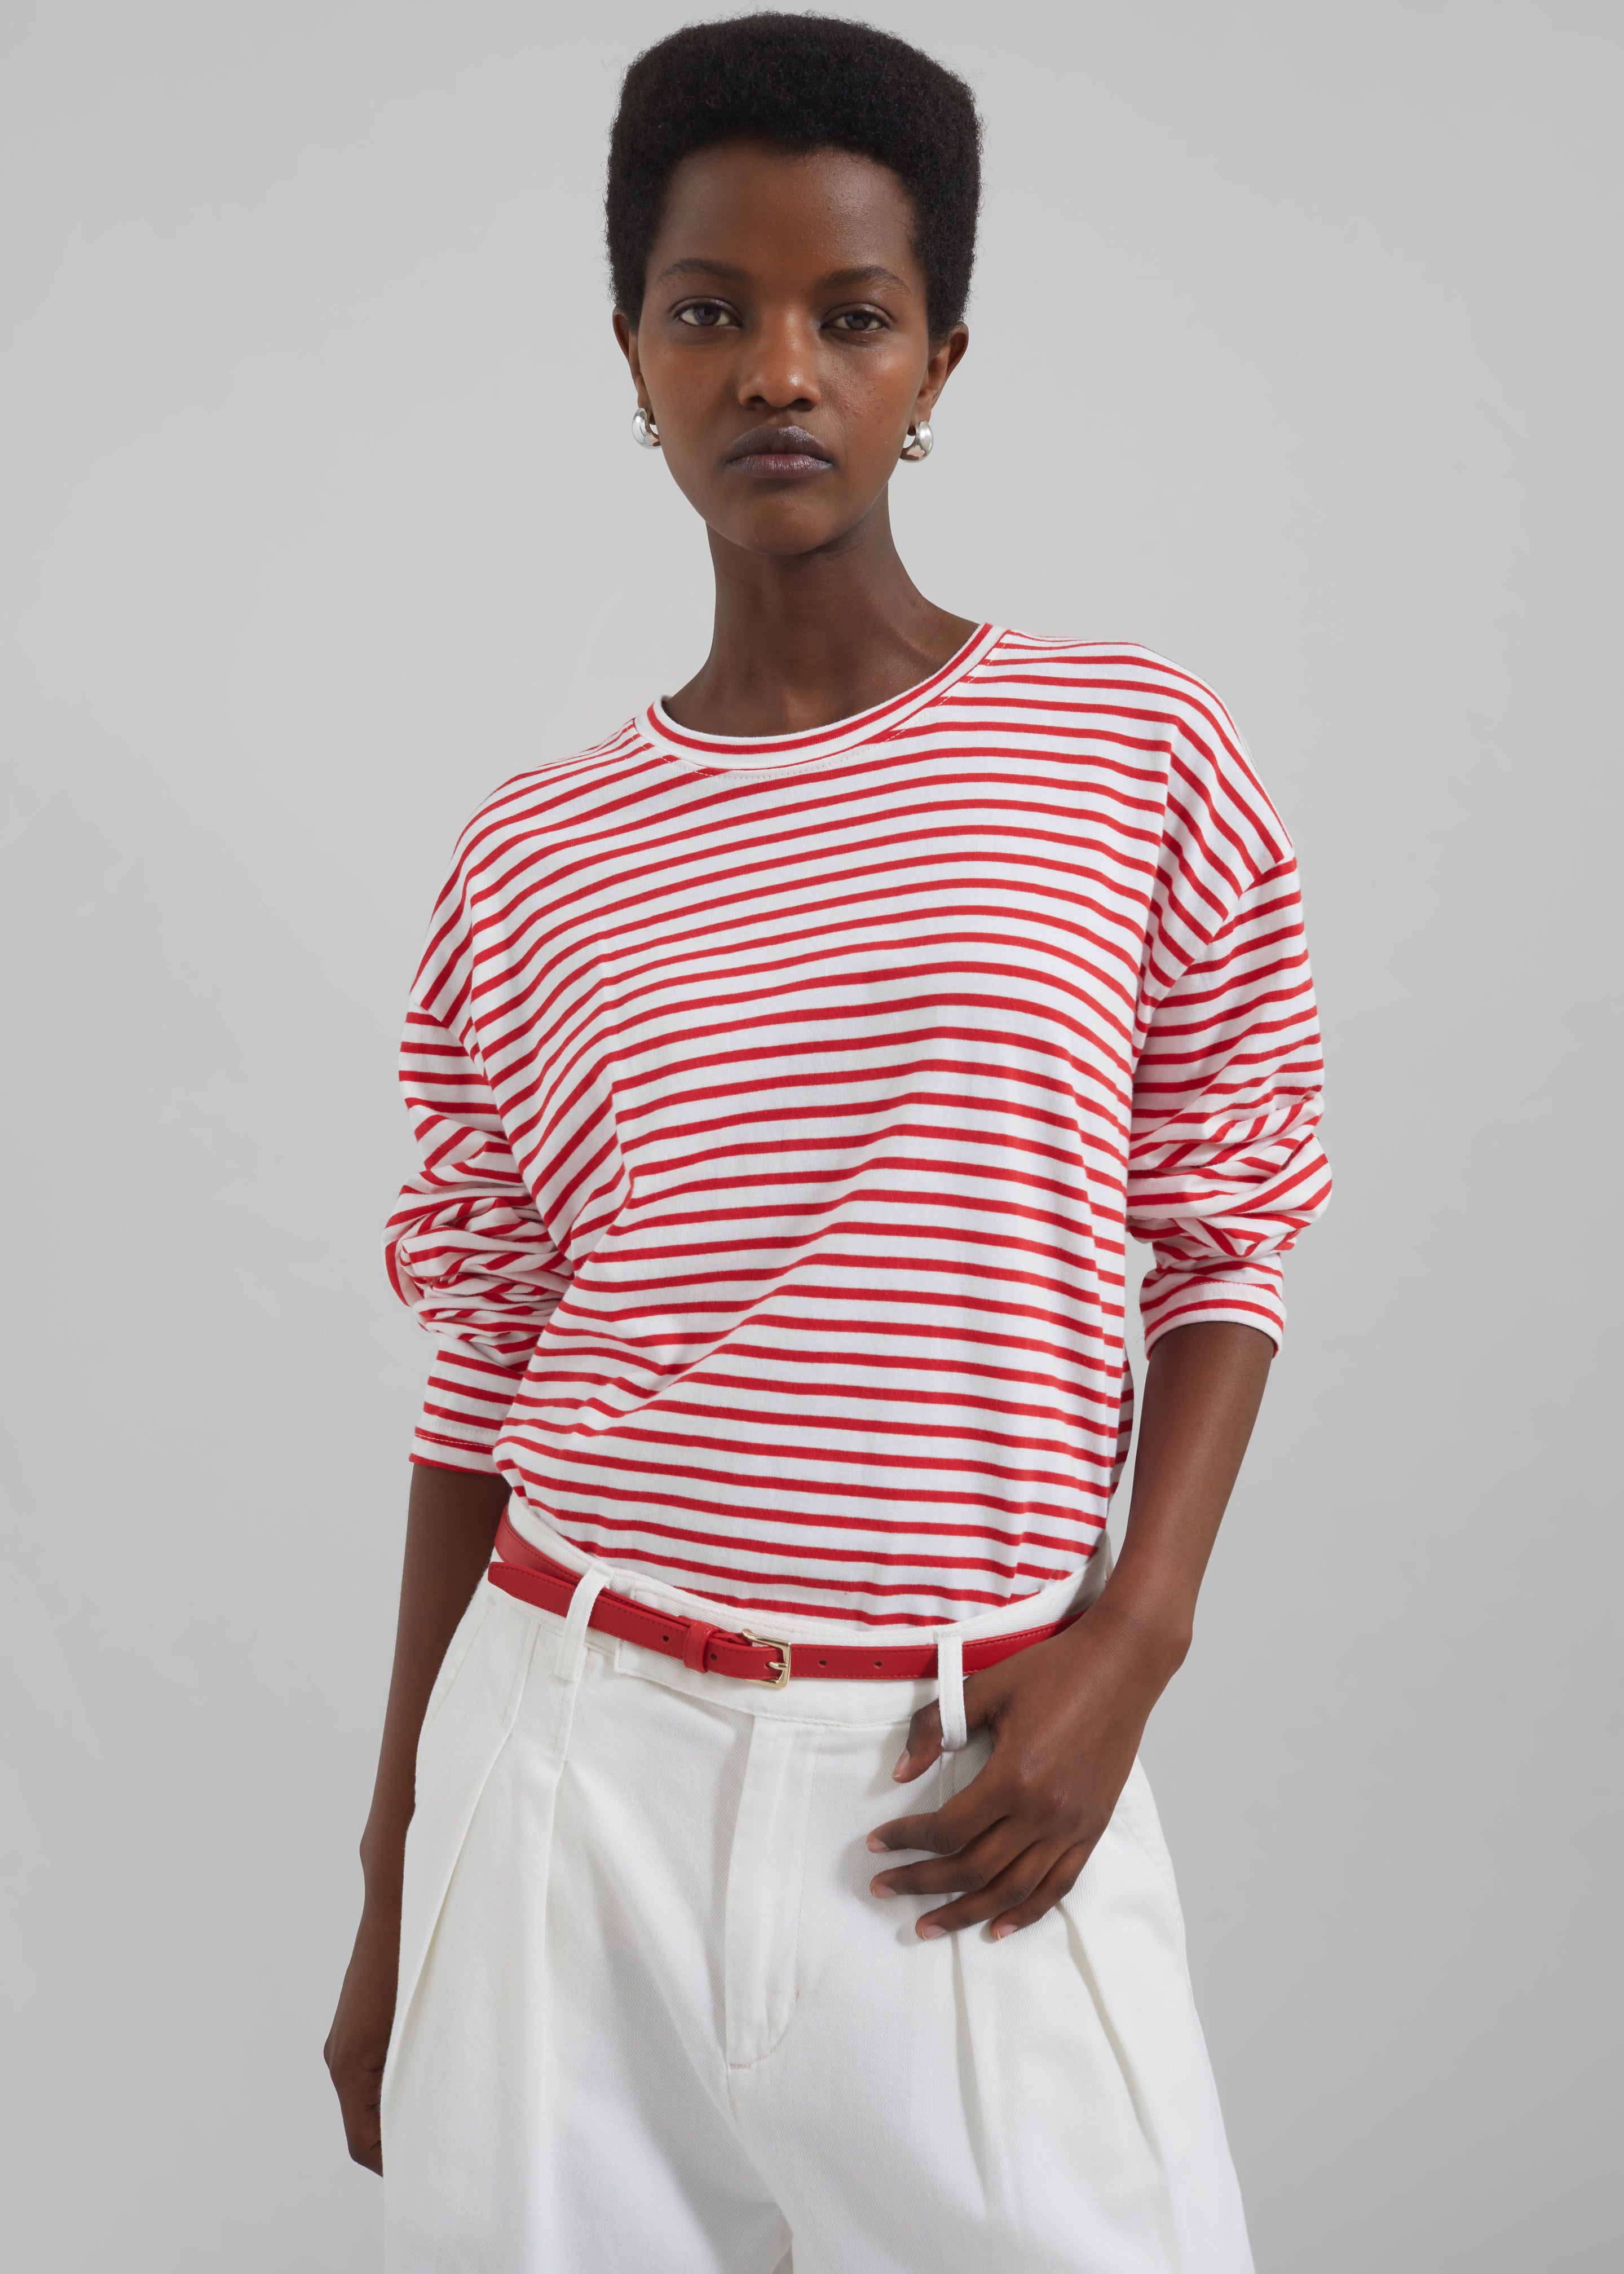 Salome Long Sleeve Tee - White/Red Stripe - 2